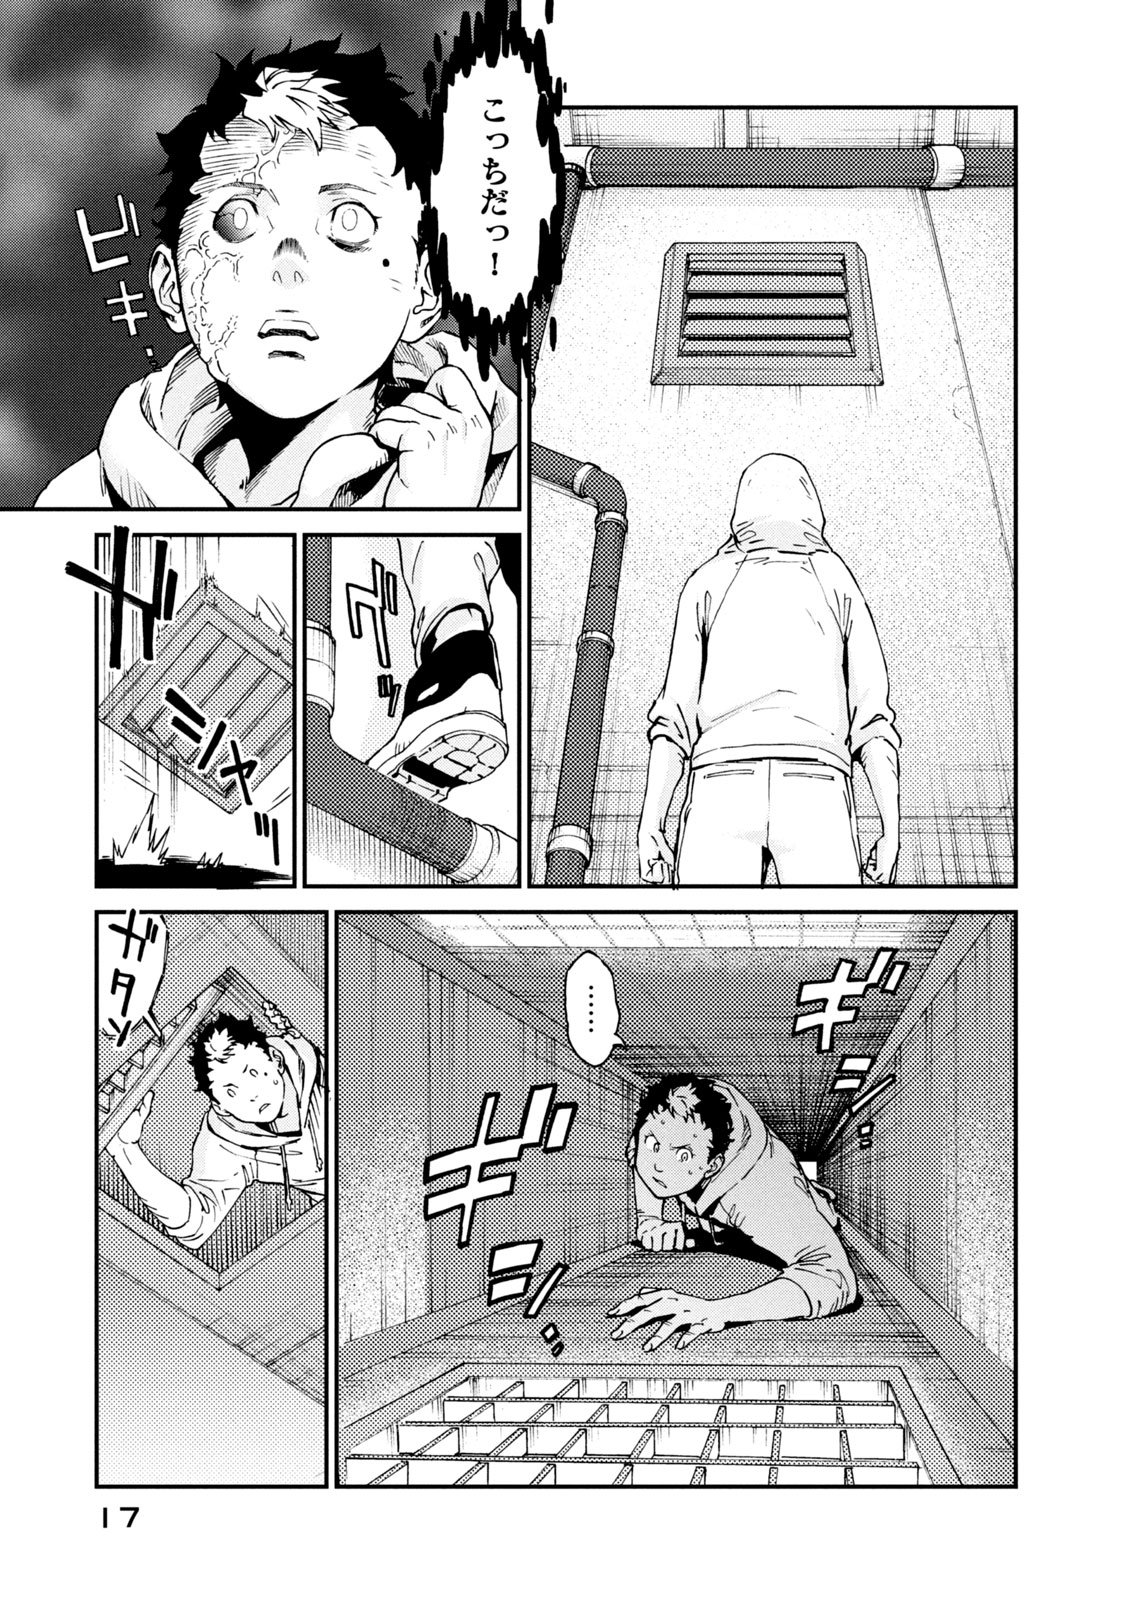 Hataraku Saibou BLACK - Chapter 37 - Page 19